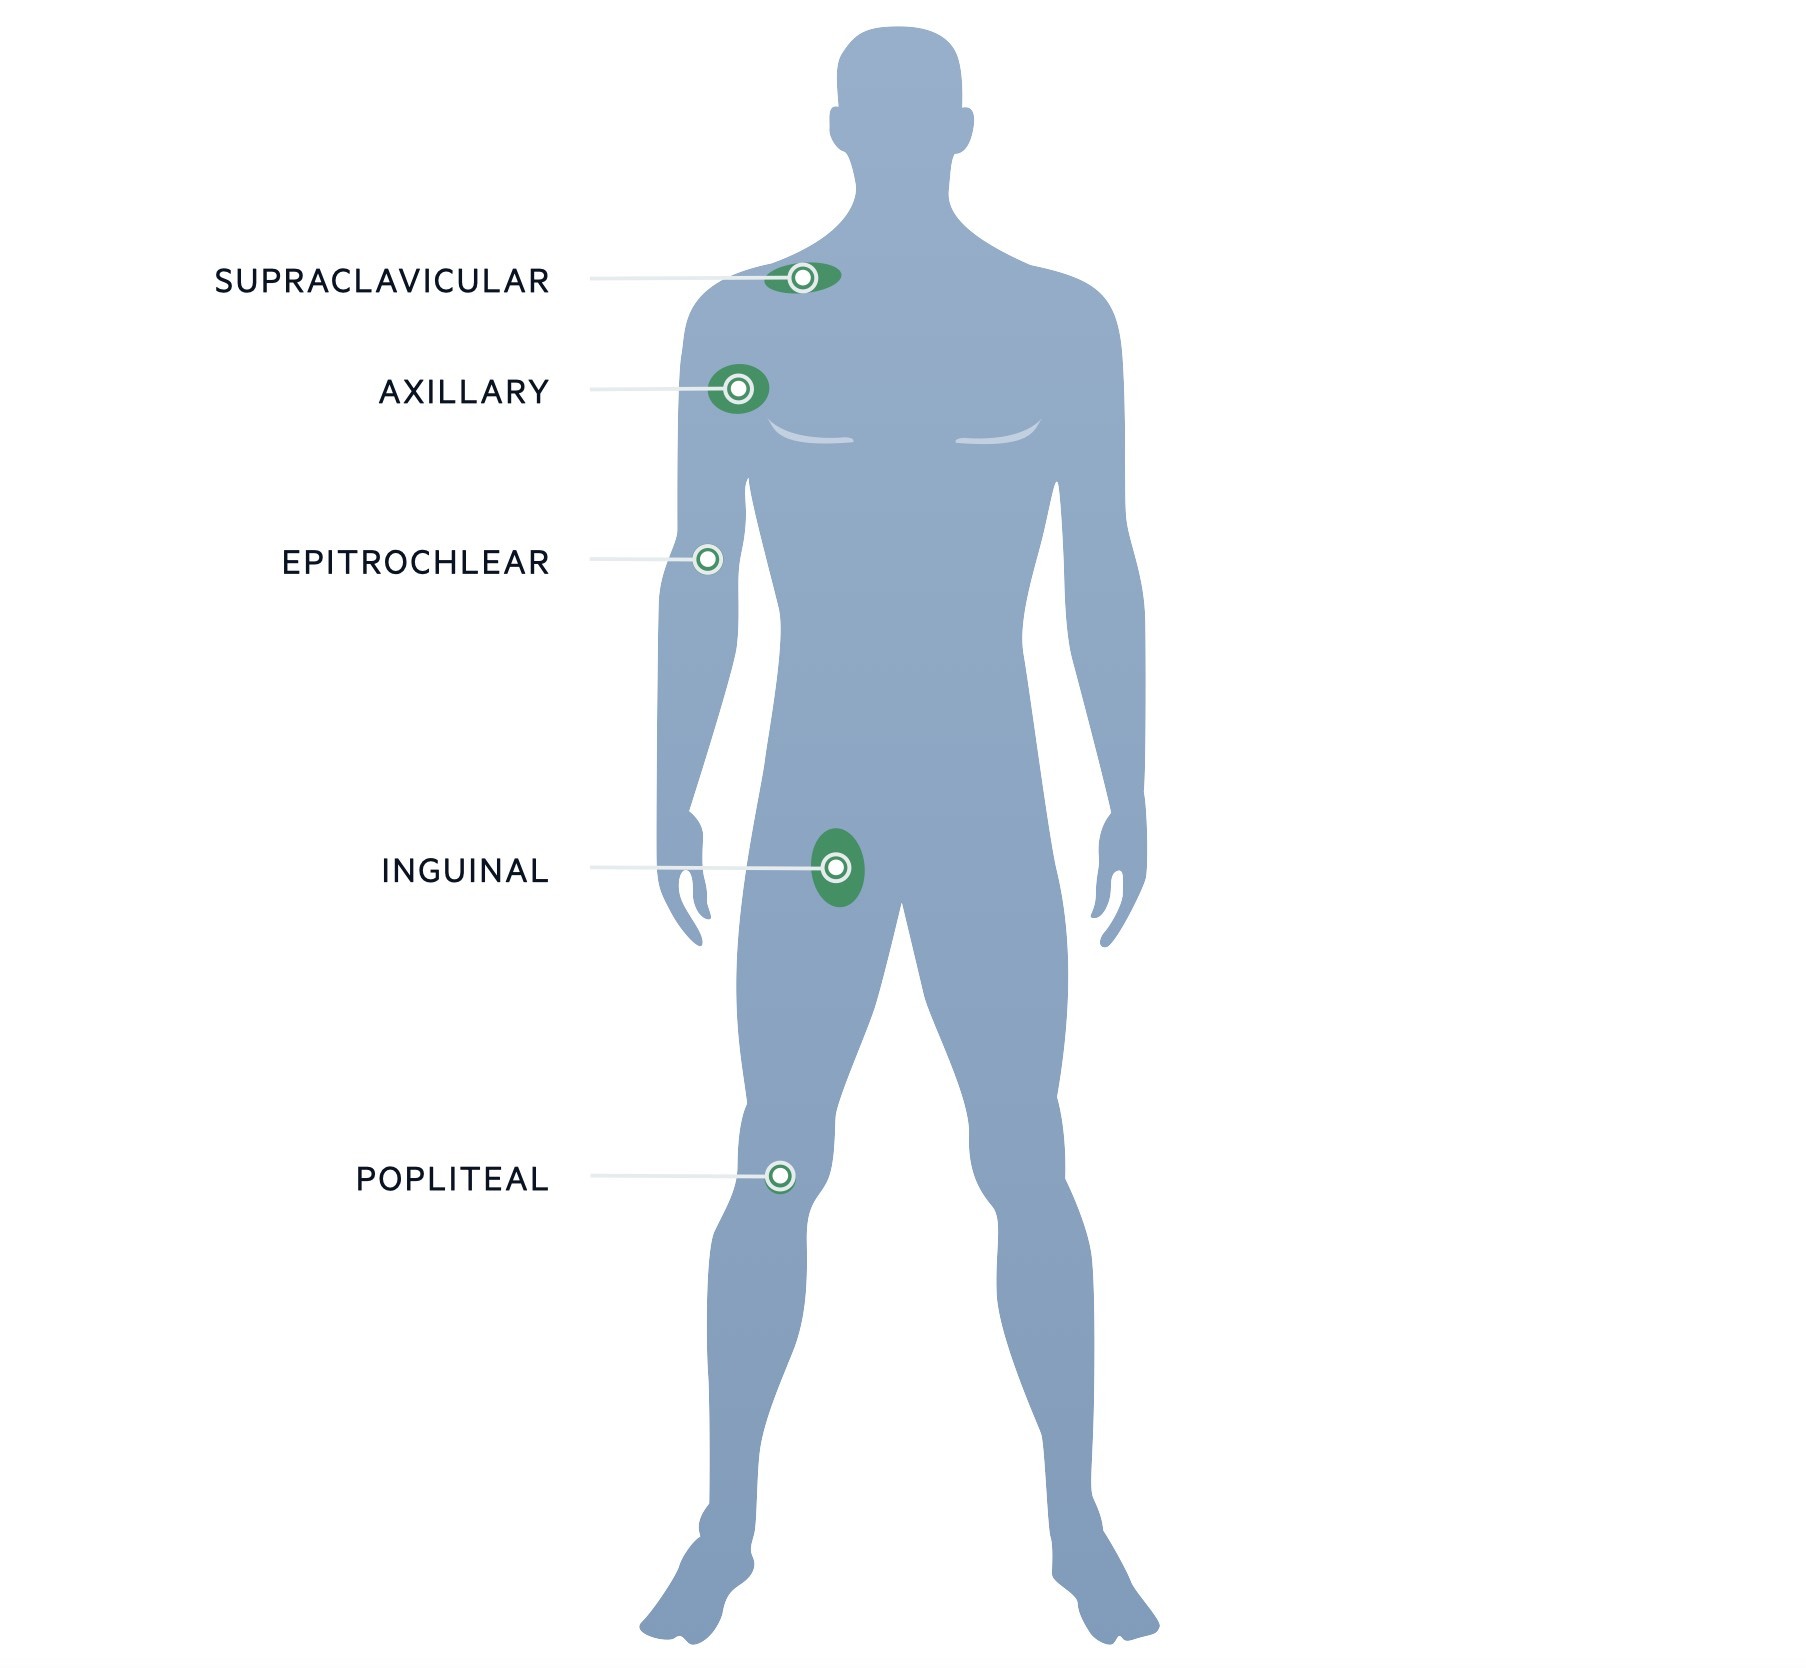 Peripheral lymph node locations